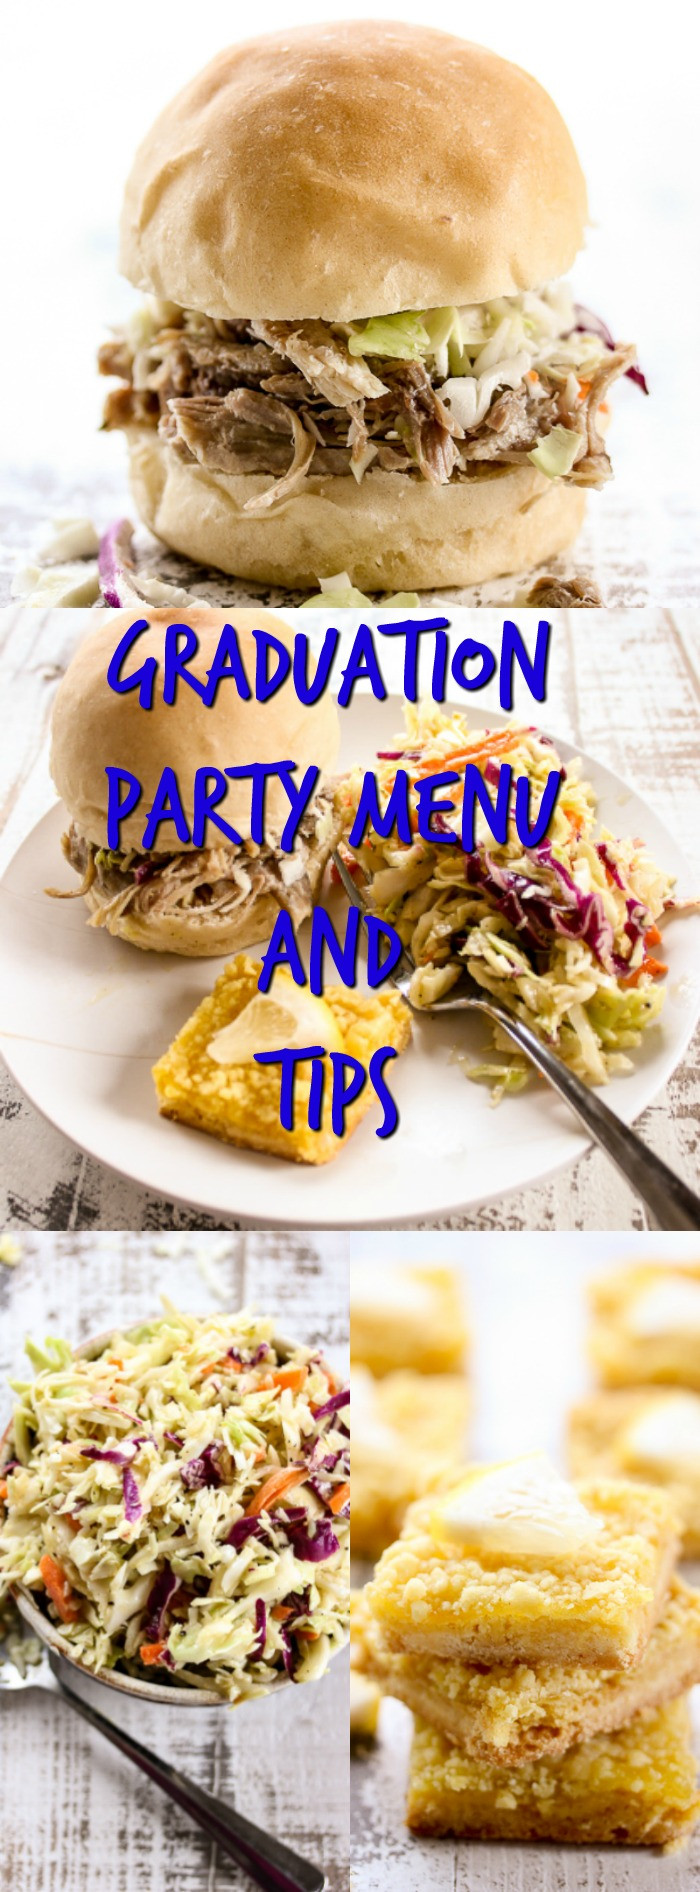 Graduation Party Menu Ideas Budget
 Graduation Party Menu and Tips Lisa s Dinnertime Dish